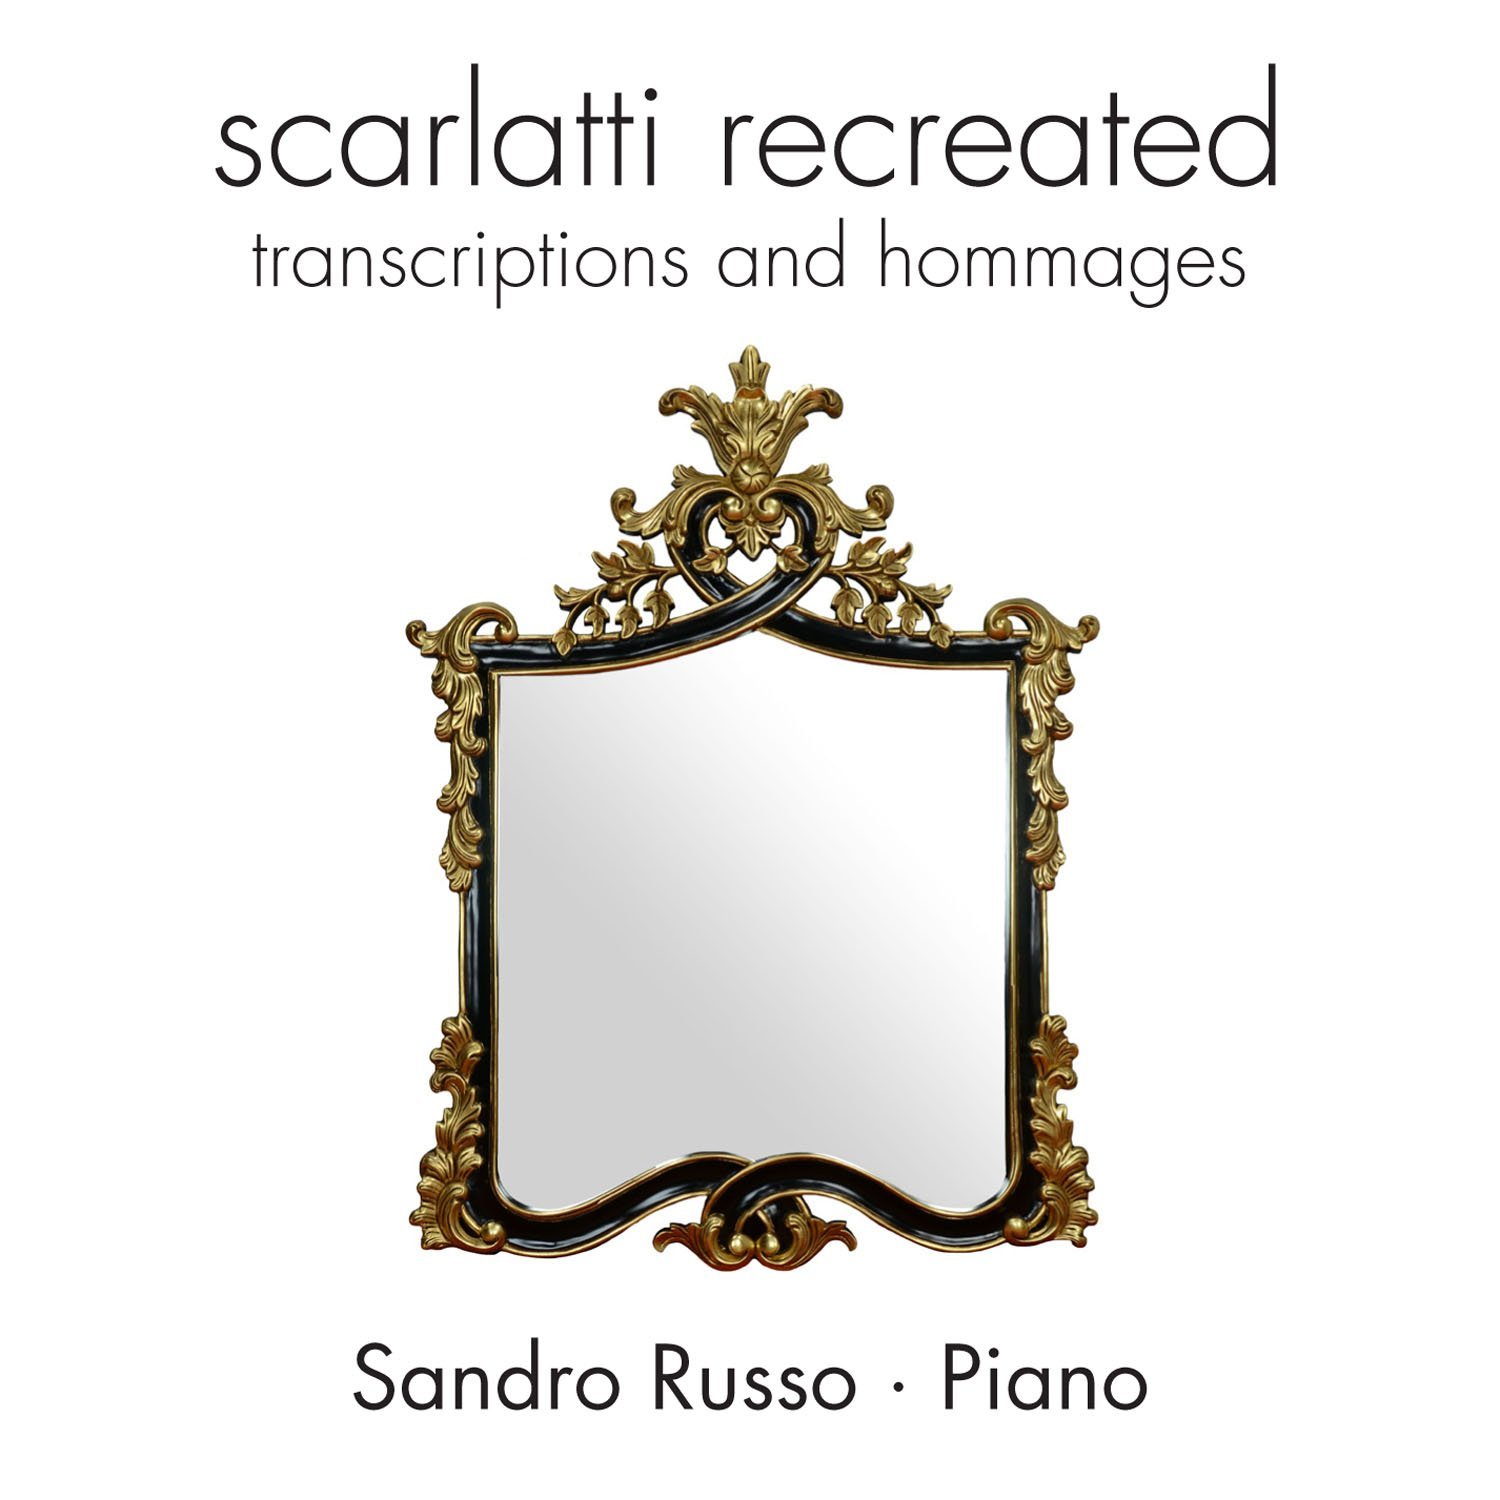 Domenico Scarlatti: discographie sélective - Page 5 71xbrz11